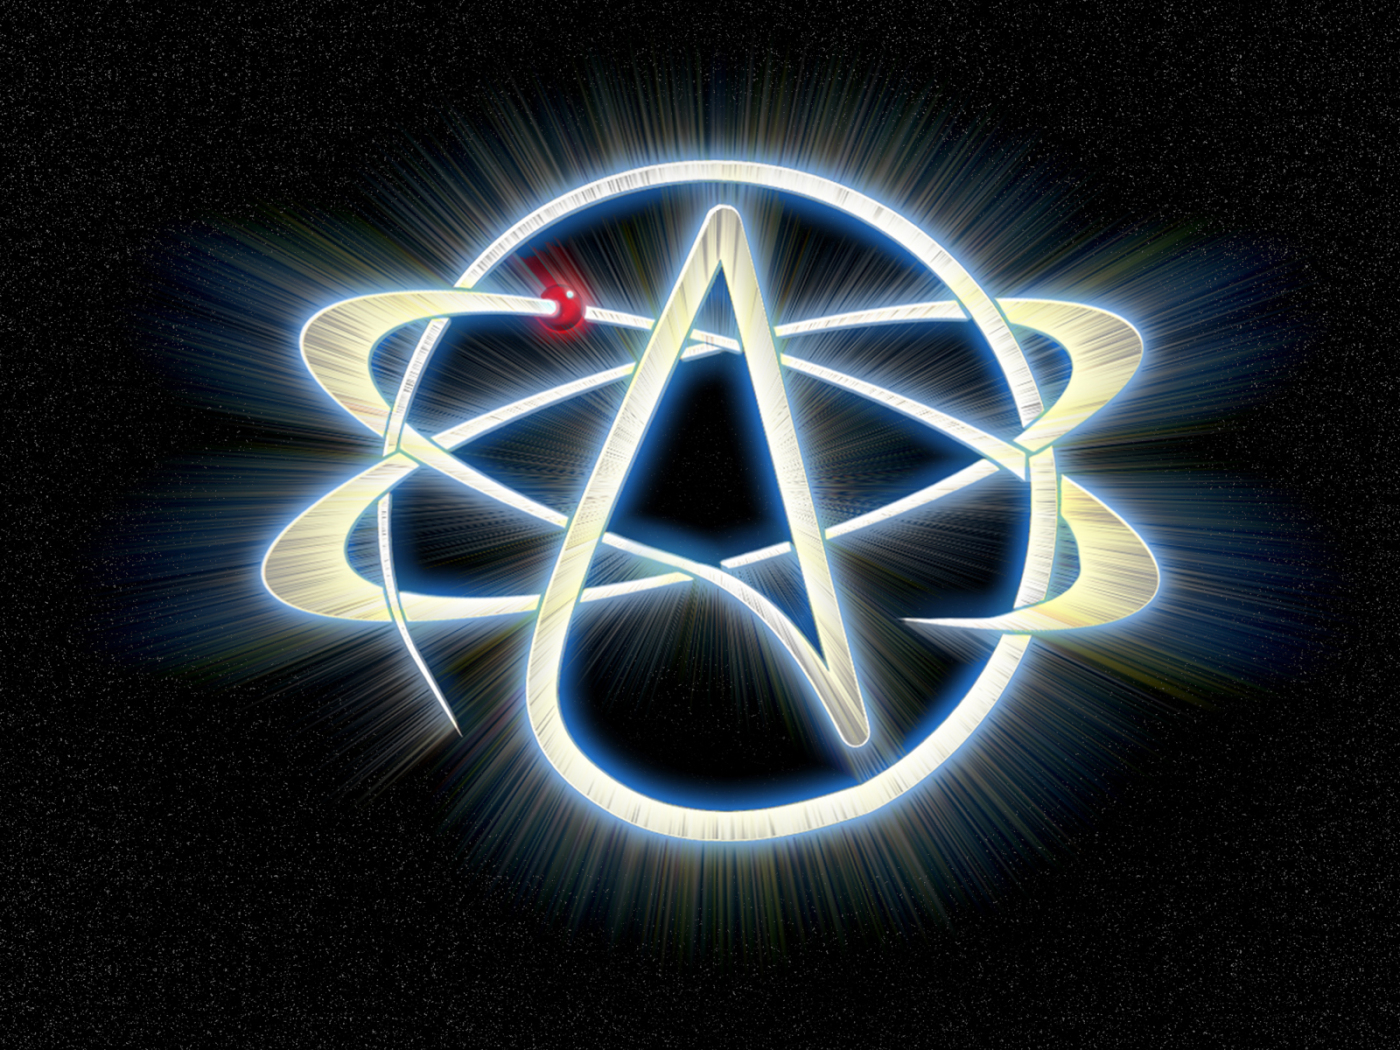 Atheist Symbol Wallpaper Image Amp Pictures Becuo